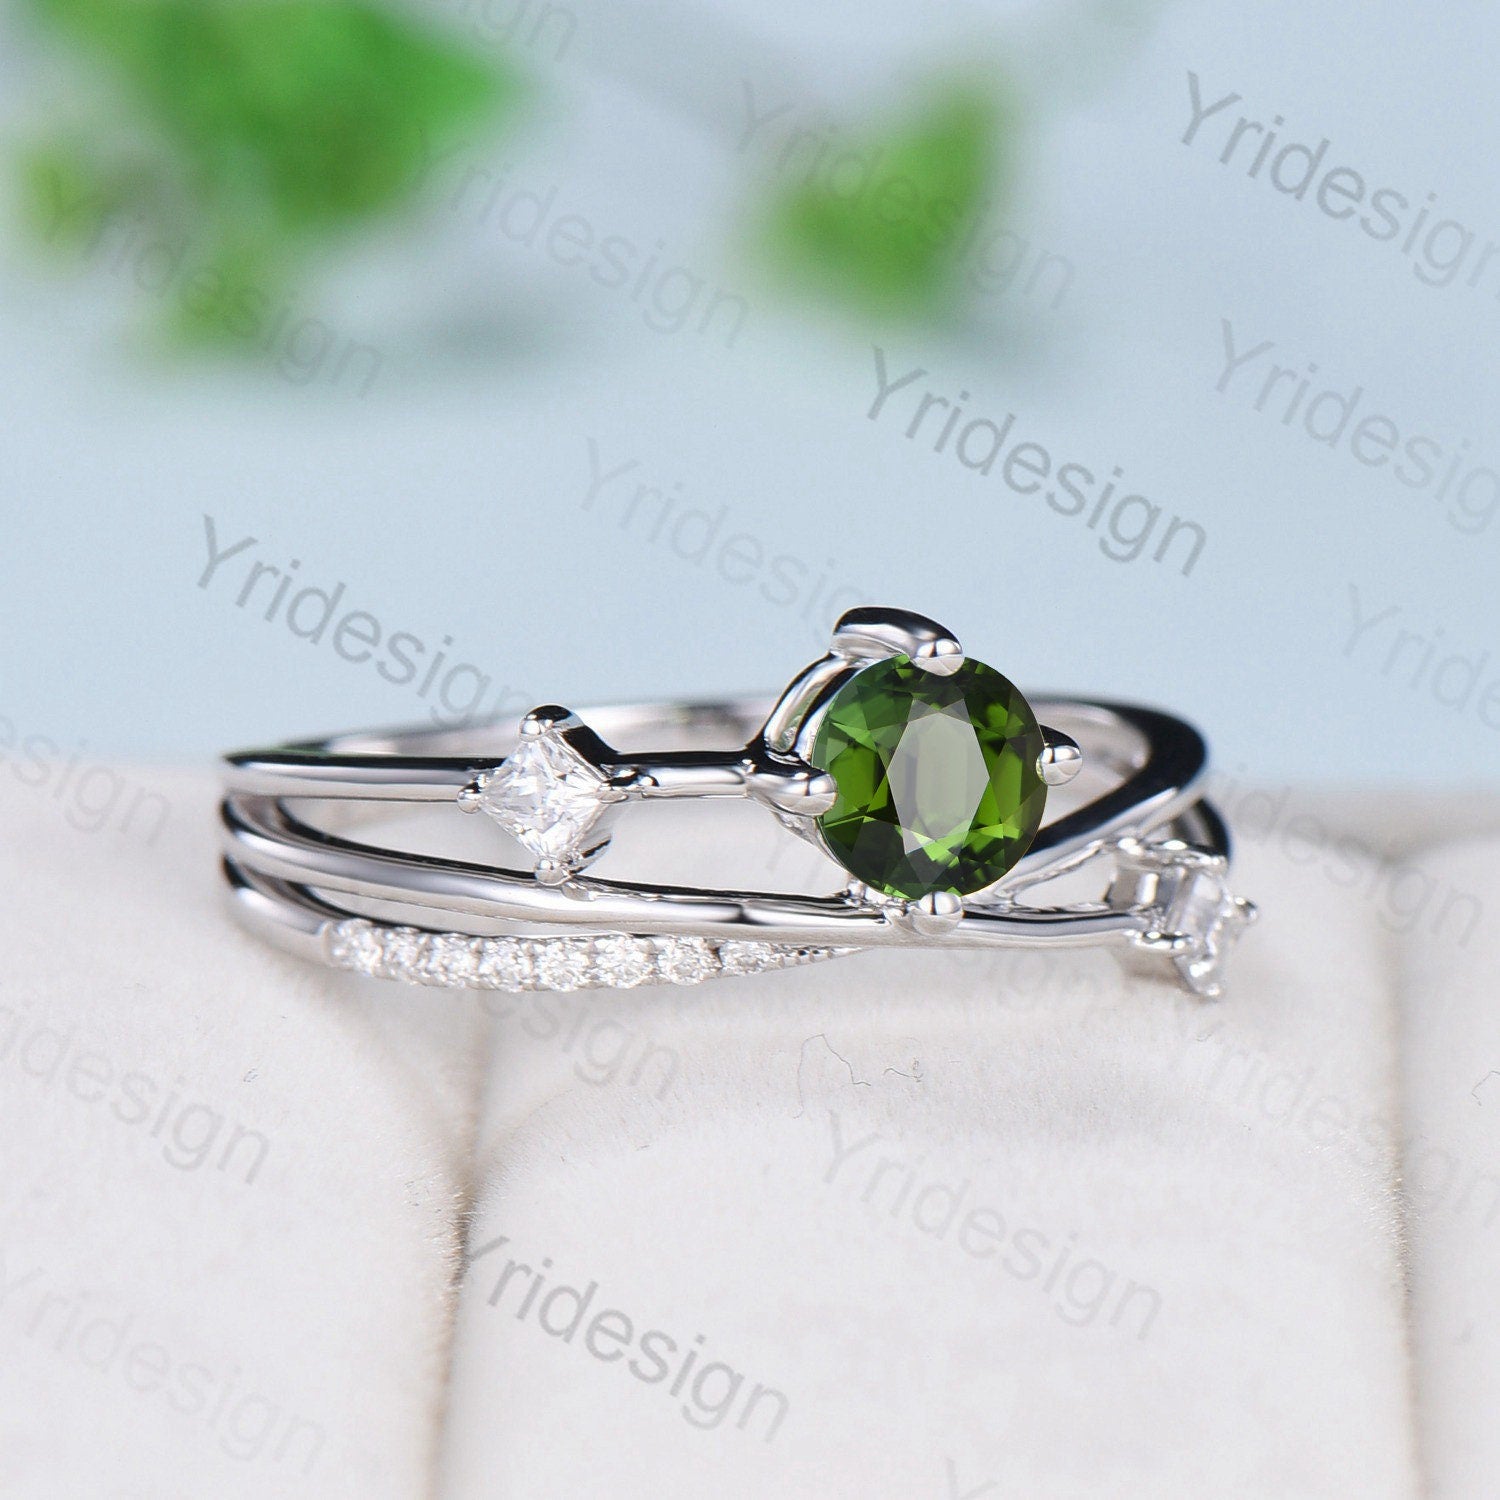 Green tourmaline and diamonds ring / Japanese Maple | Eden Garden Jewelry™